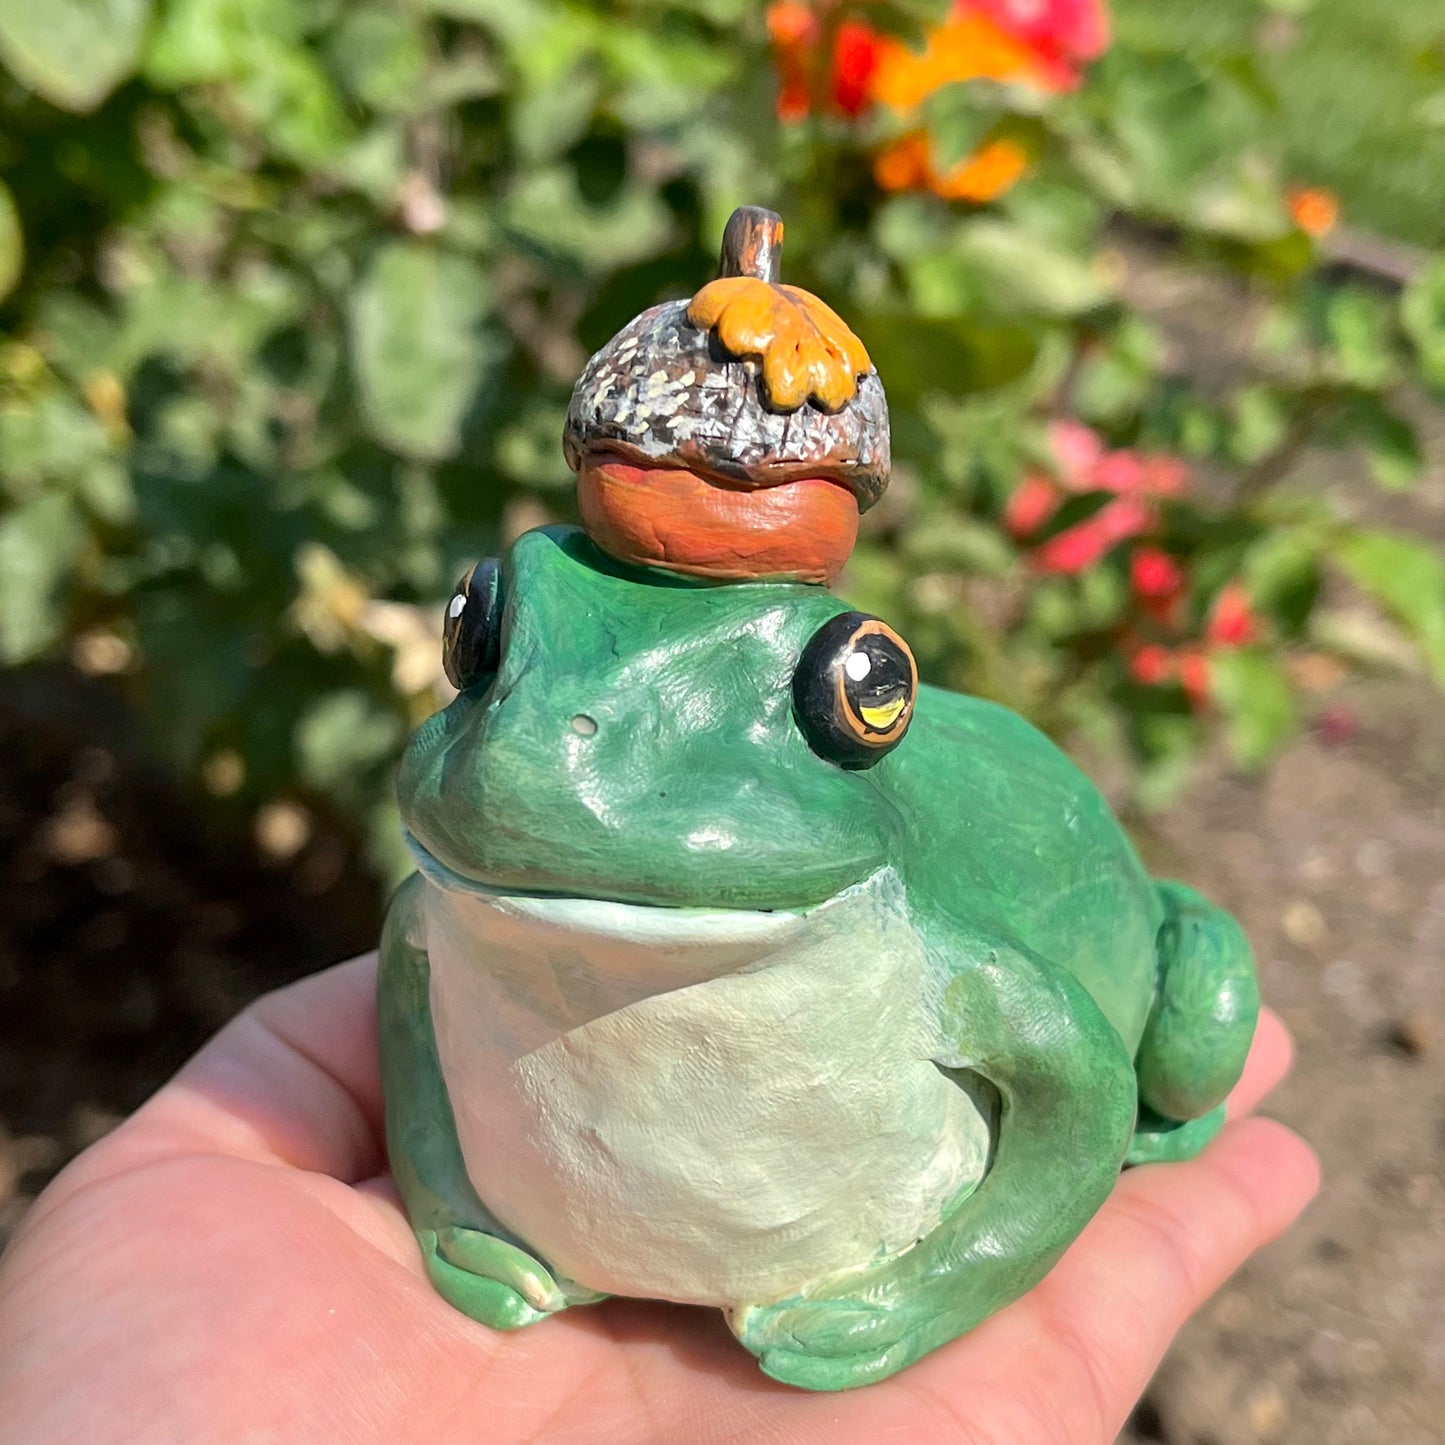 Handmade polymer clay green frog with acorn hat figurine